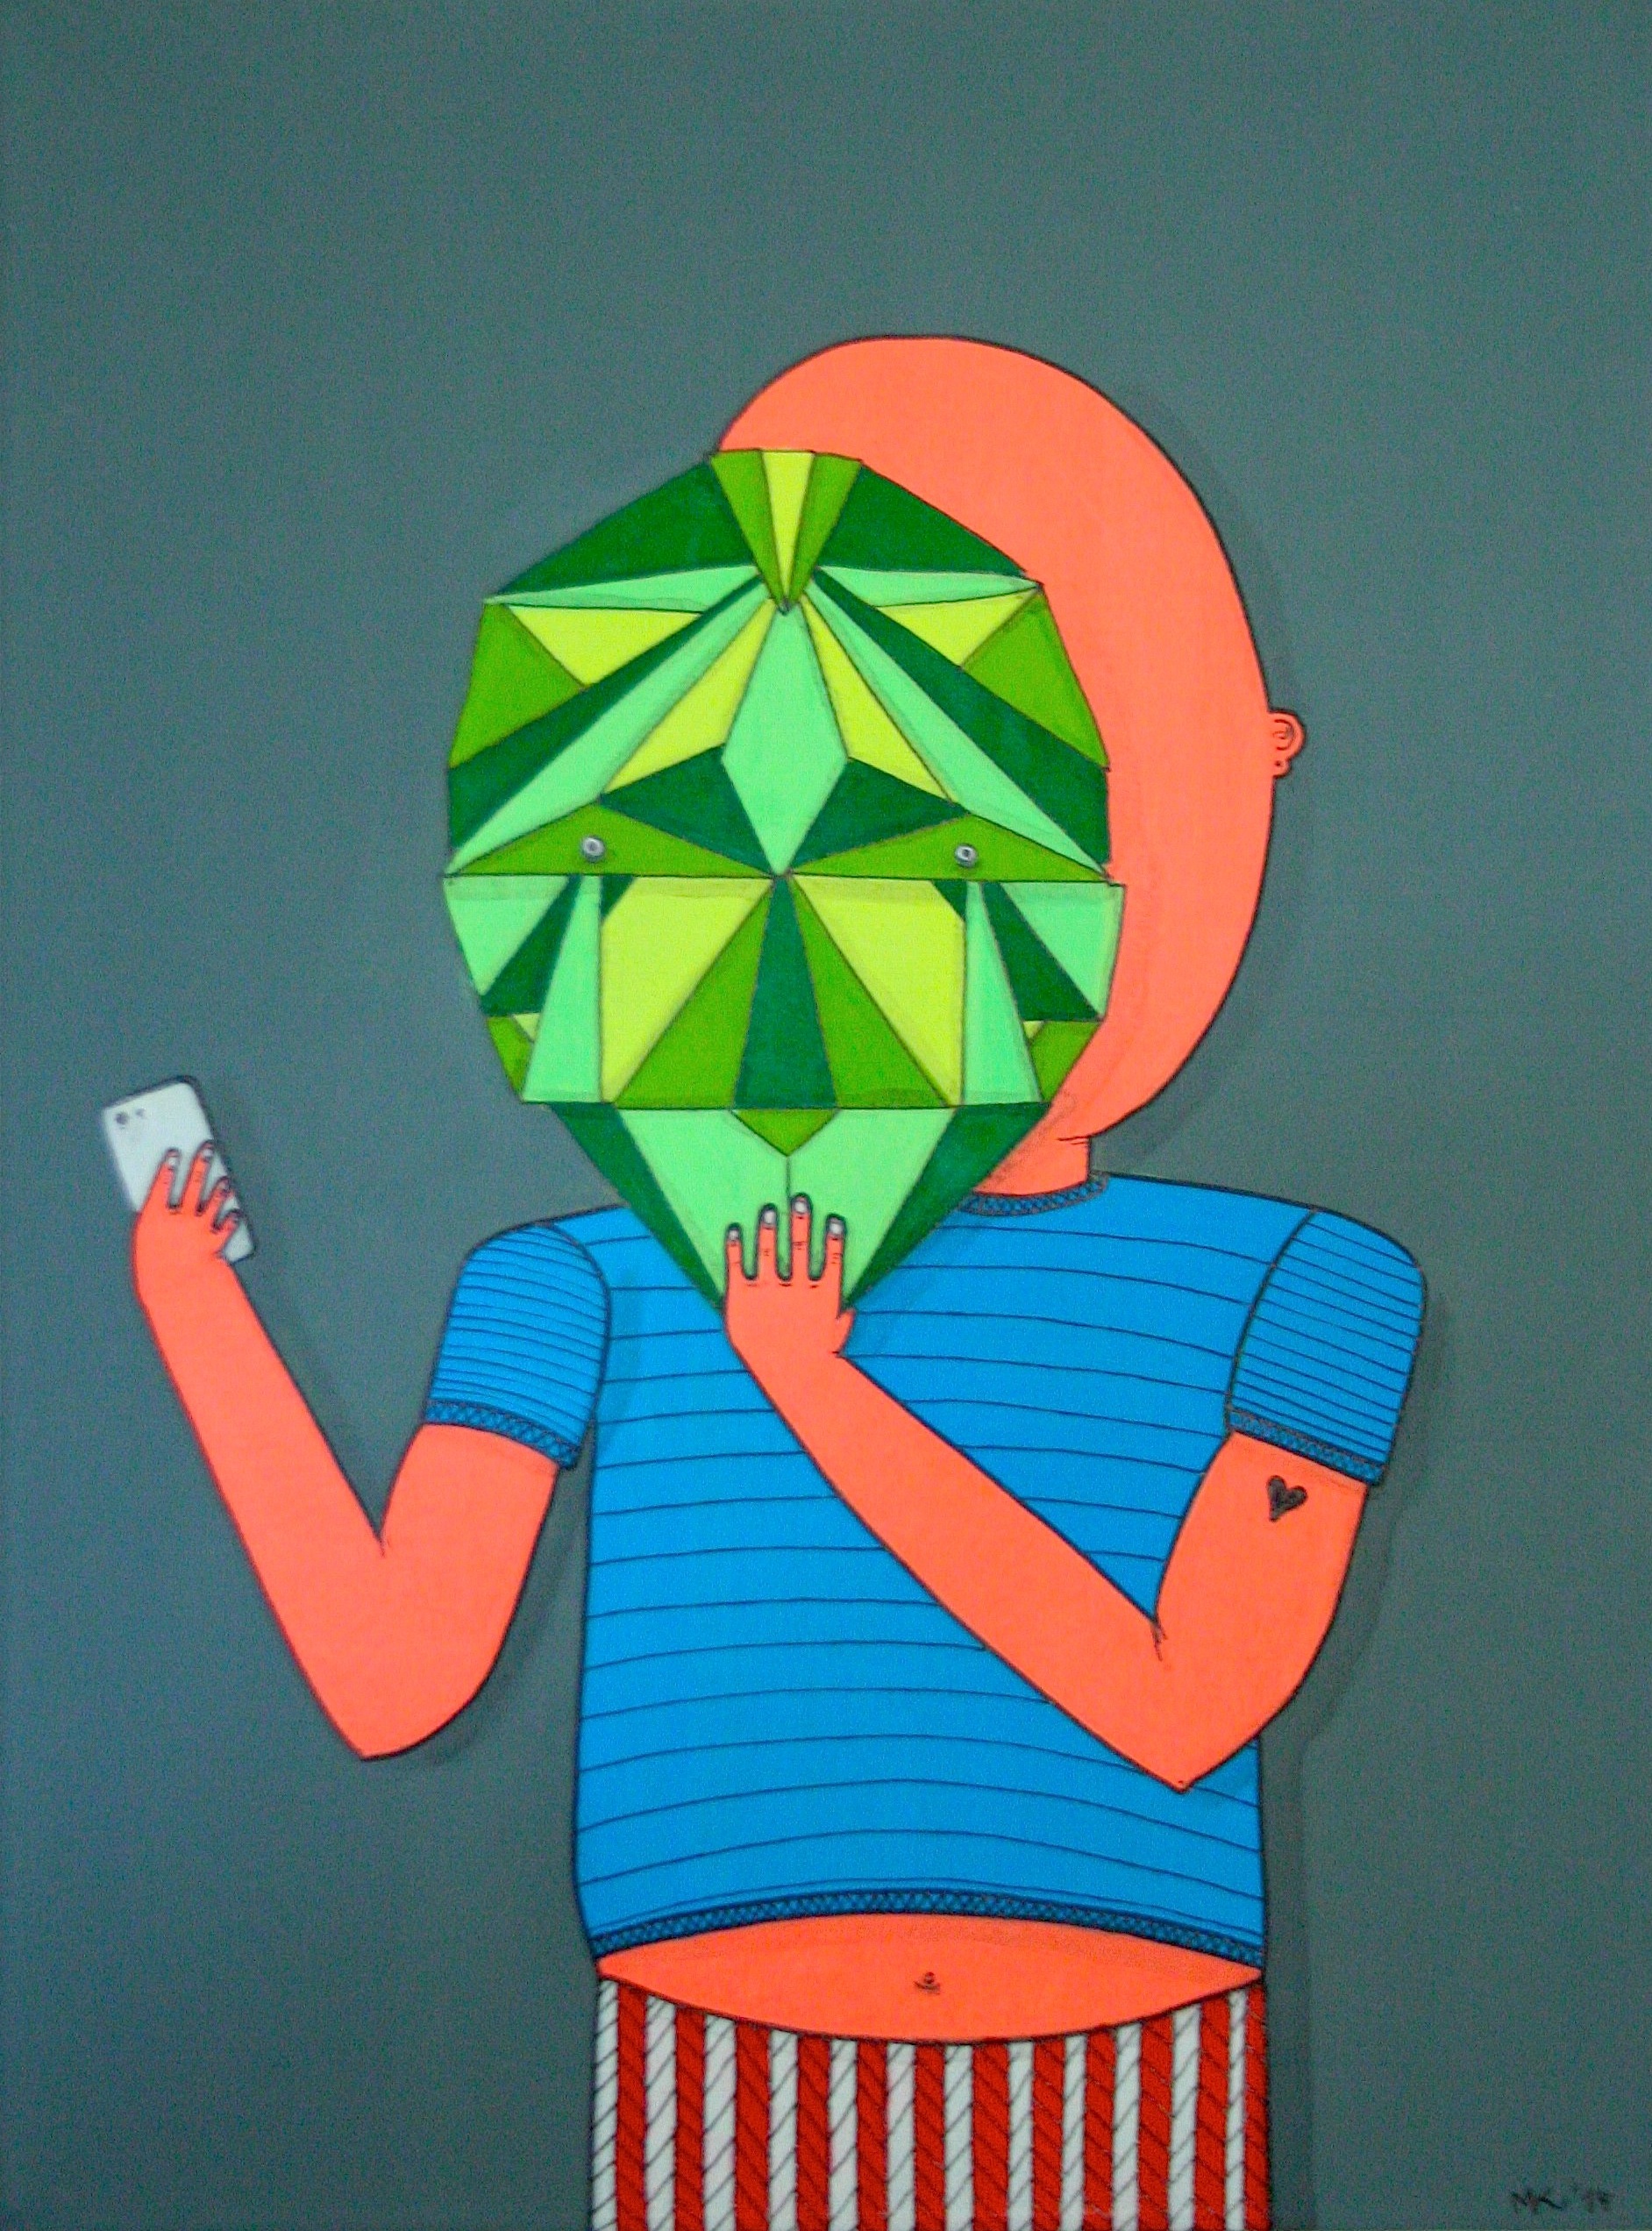 8 bit mask selfie painting art canvas streetart detail